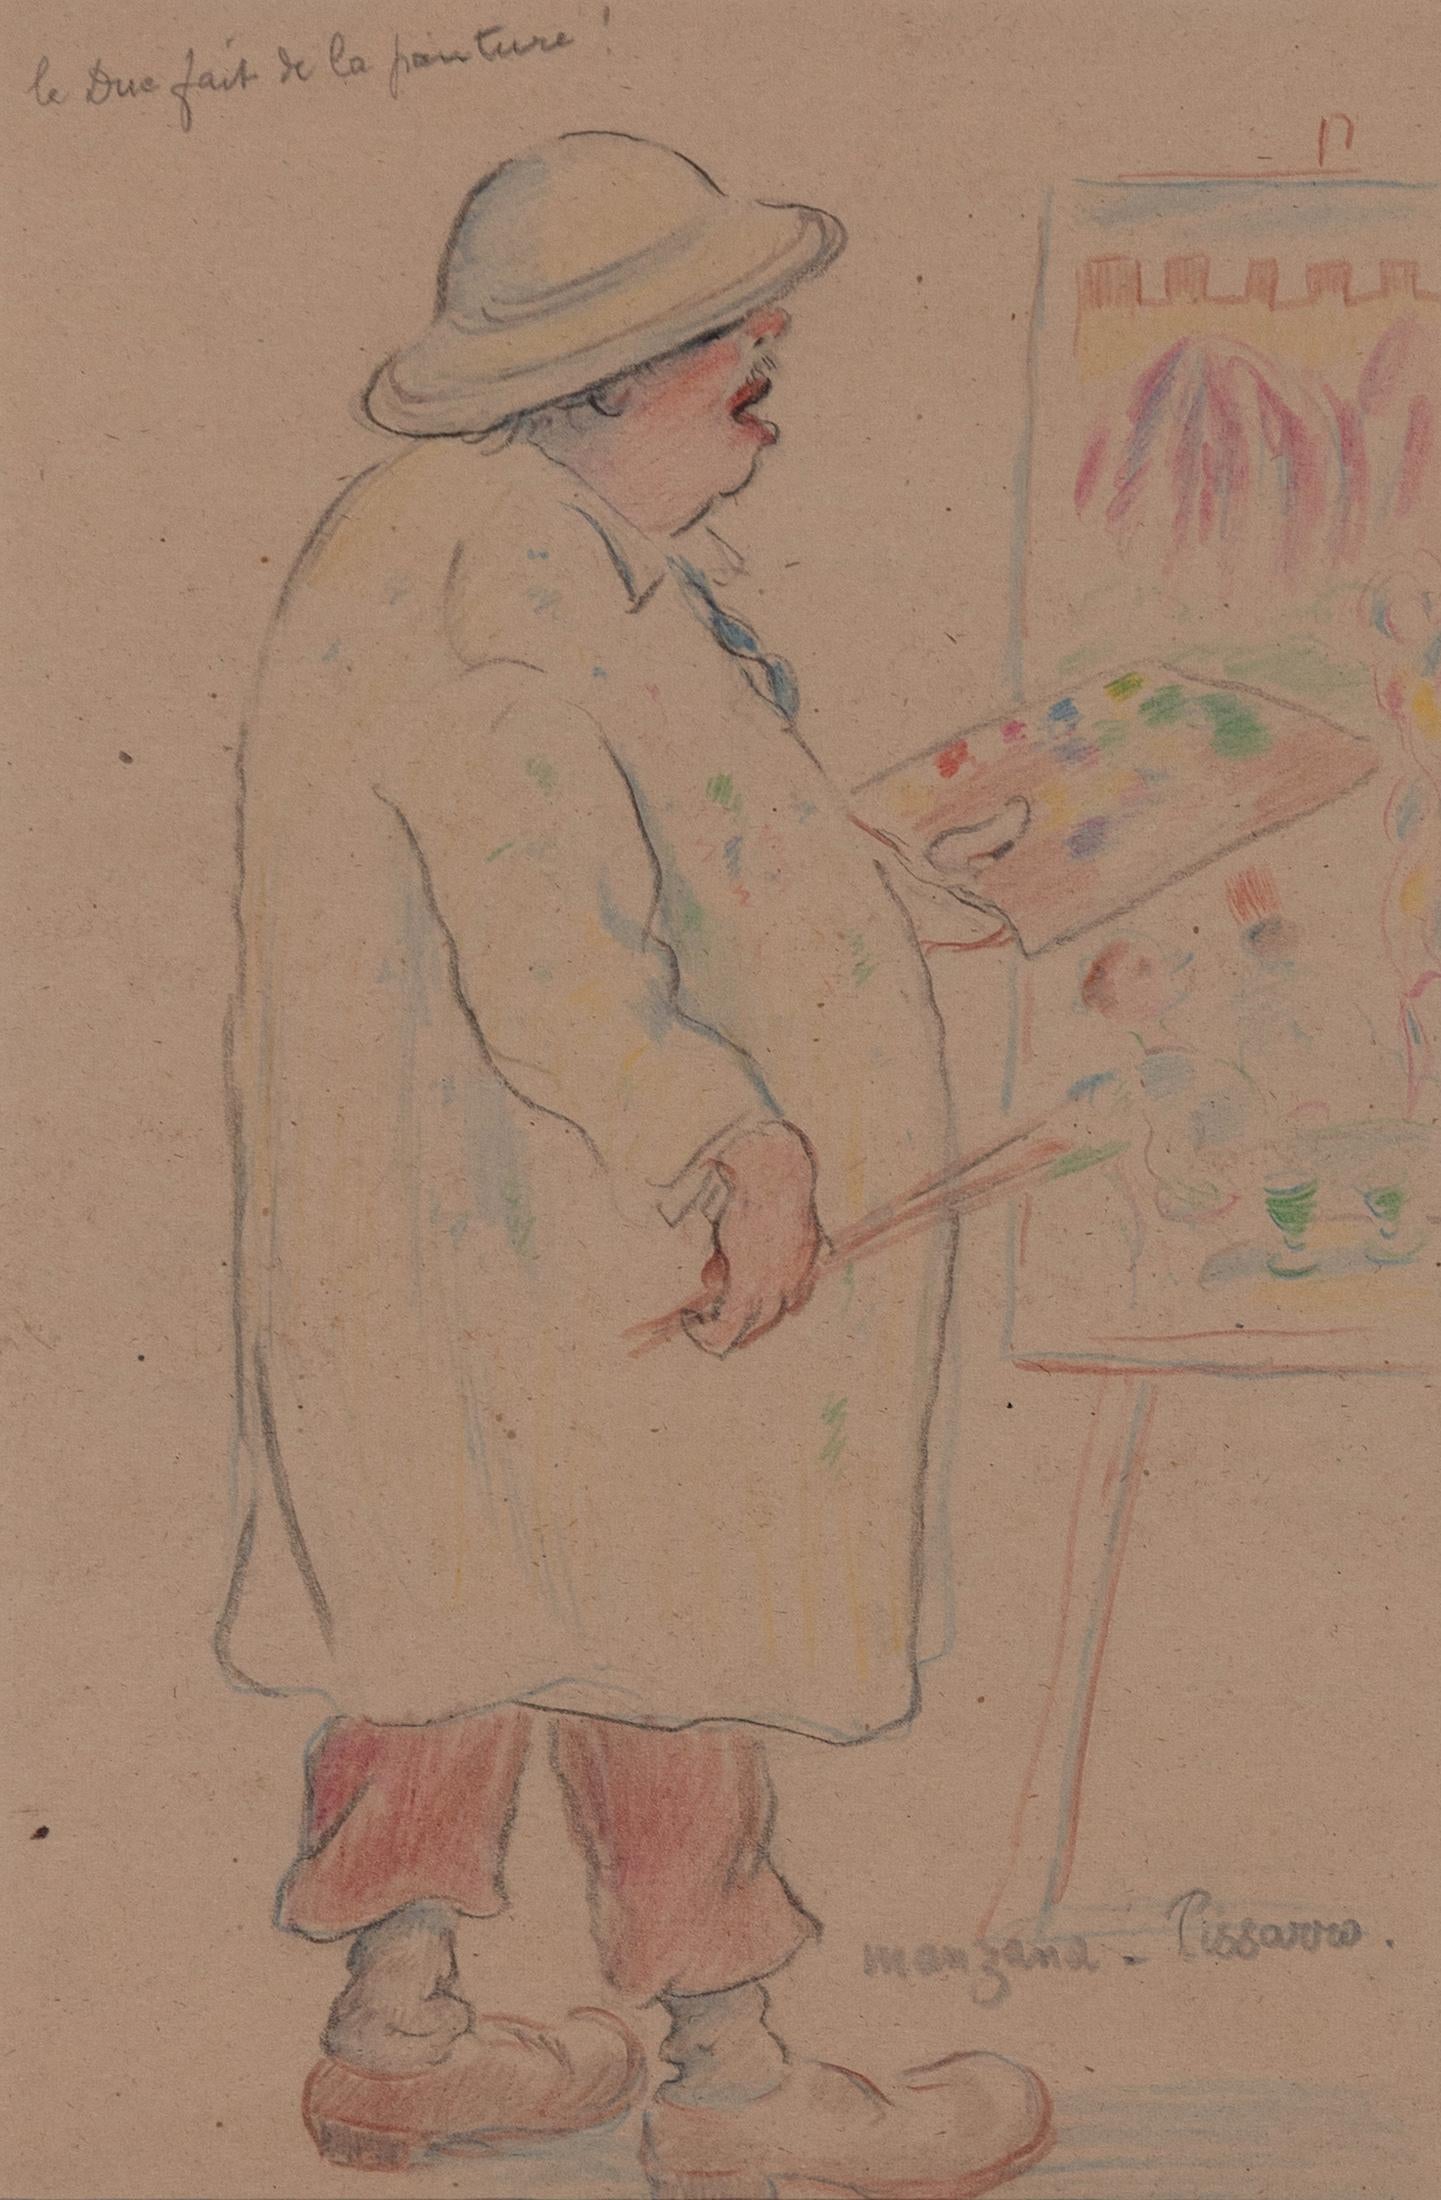 Figurative Art Georges Henri Manzana Pissarro - Le Due Fait de la Peinture de Georges Manzana Pissarro - dessin coloré